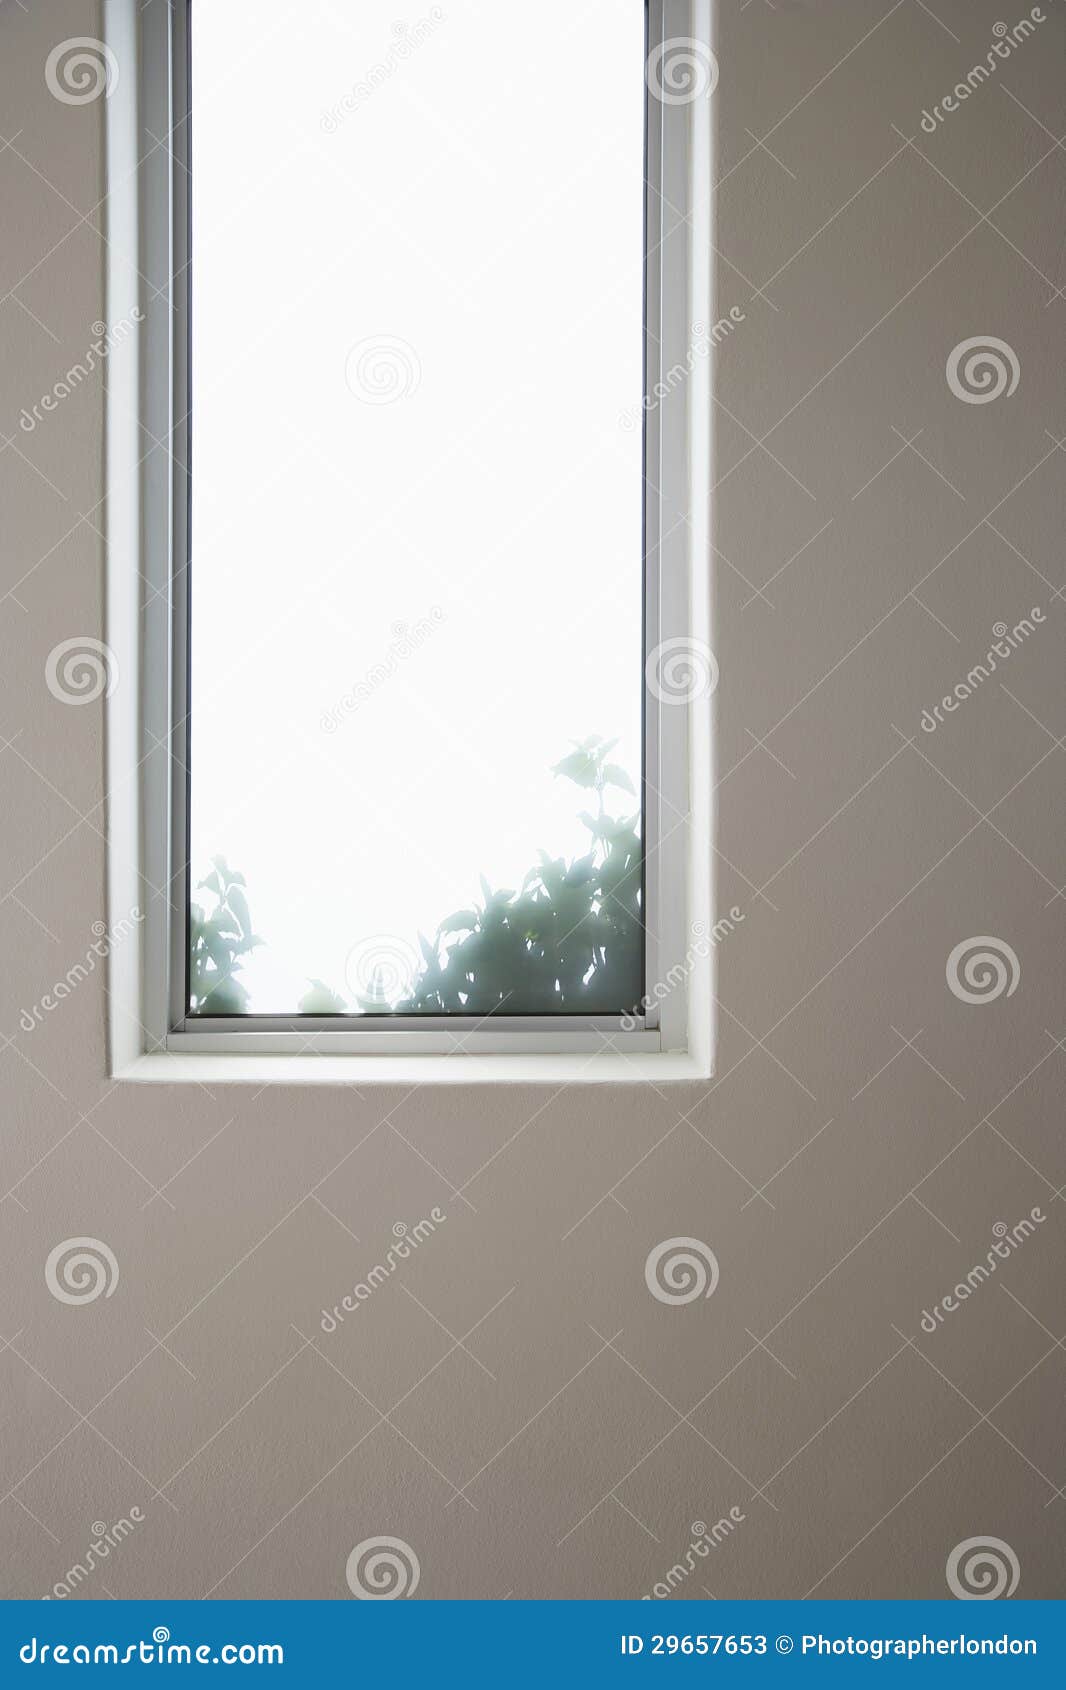 elongated window